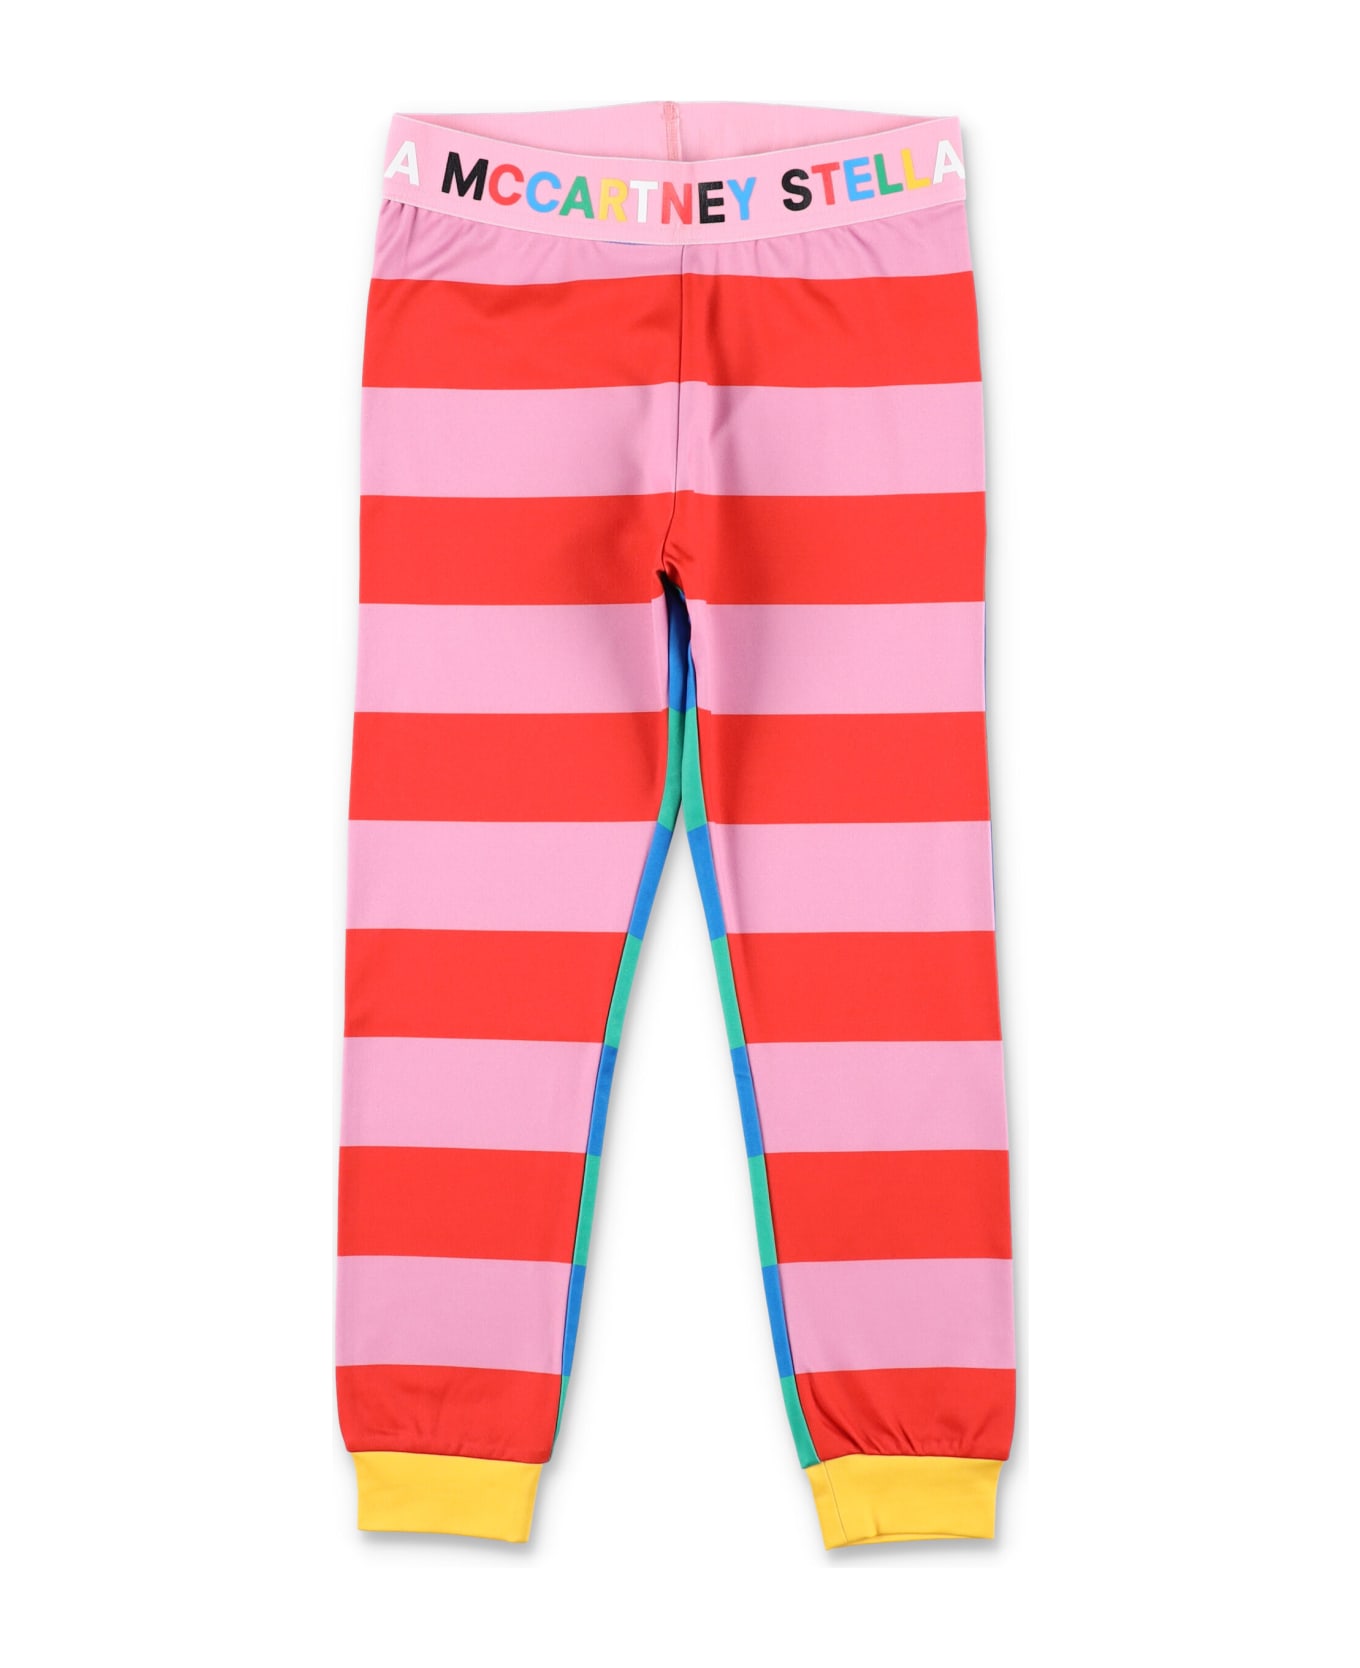 Stella McCartney Kids Activewear Set - MULTICOLORED